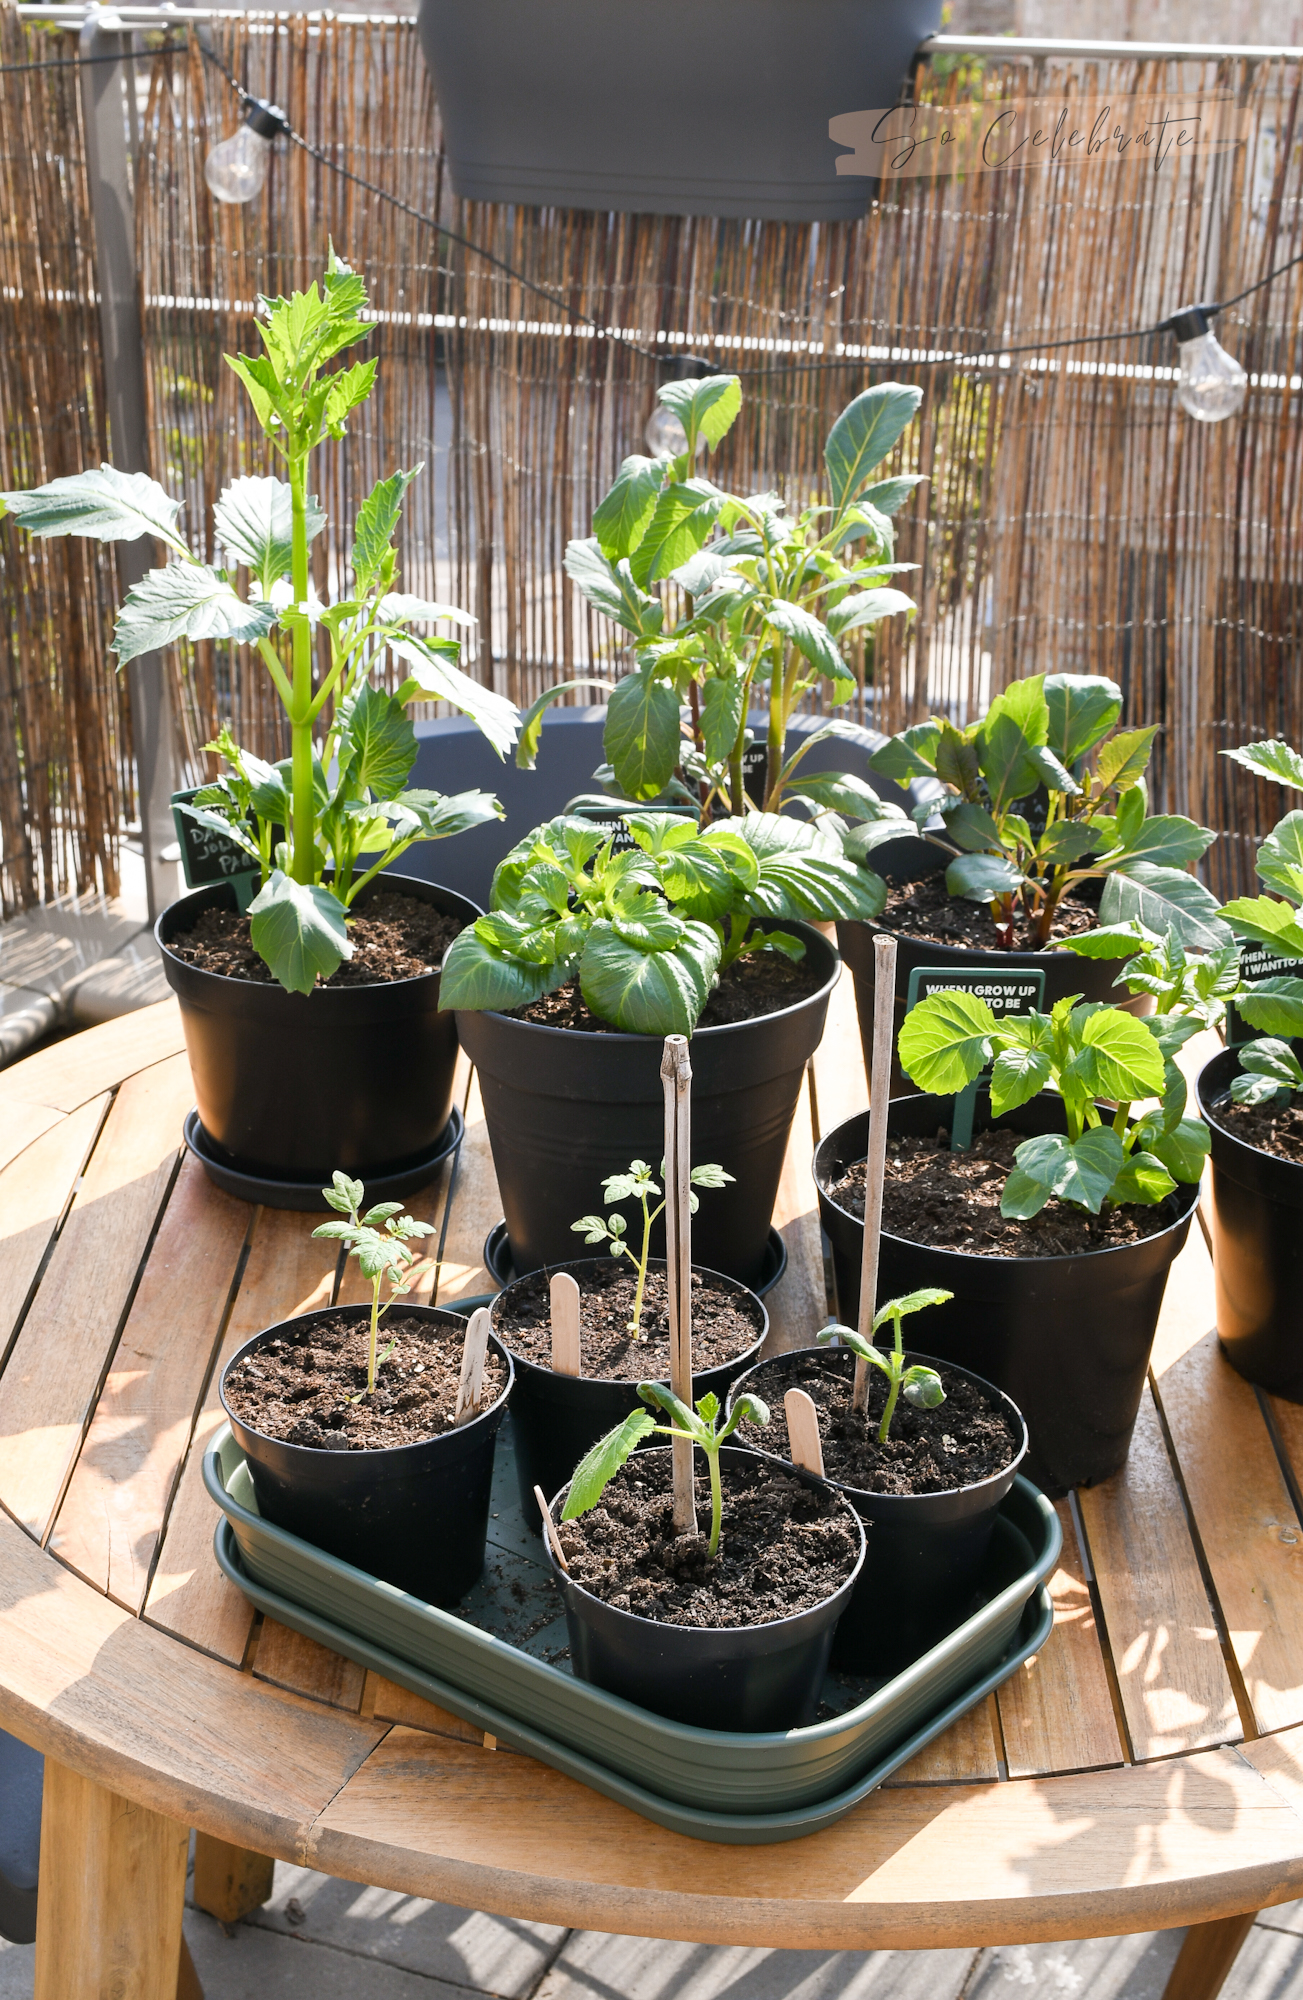 bewijs maak het plat Lelie Moestuin in kleine tuin of op balkon: zo kweek je véél groente & fruit!